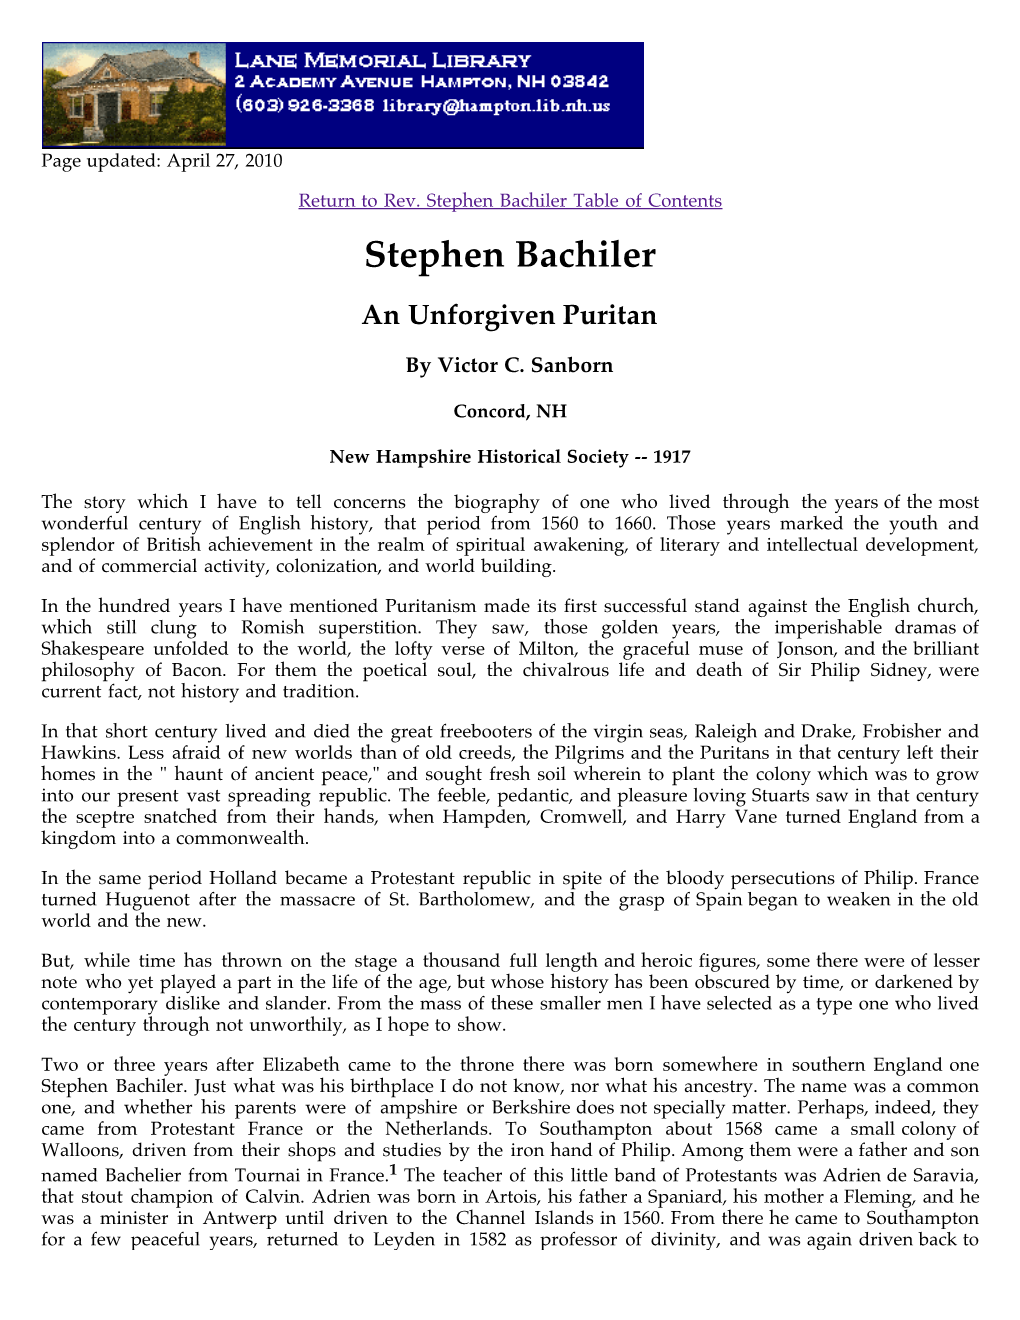 Biography of Rev. Stephen Bachiler